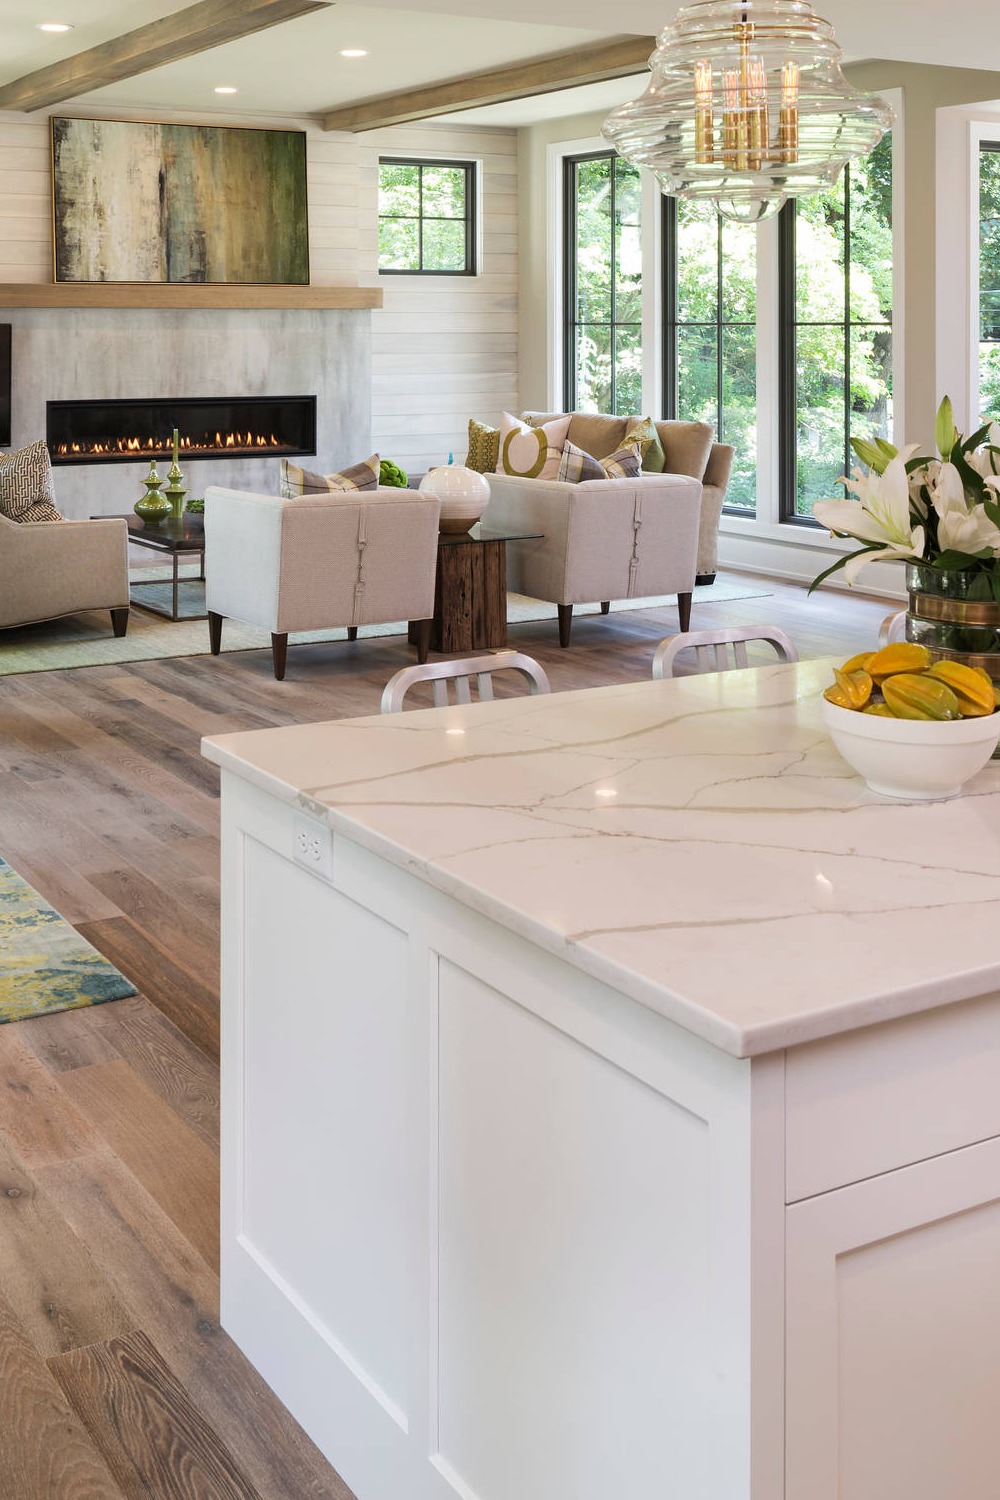 Light Wood Floor Shaker White Cabinets Quartz Countertops Open Concept Kitchen Layout Pendant Lighting